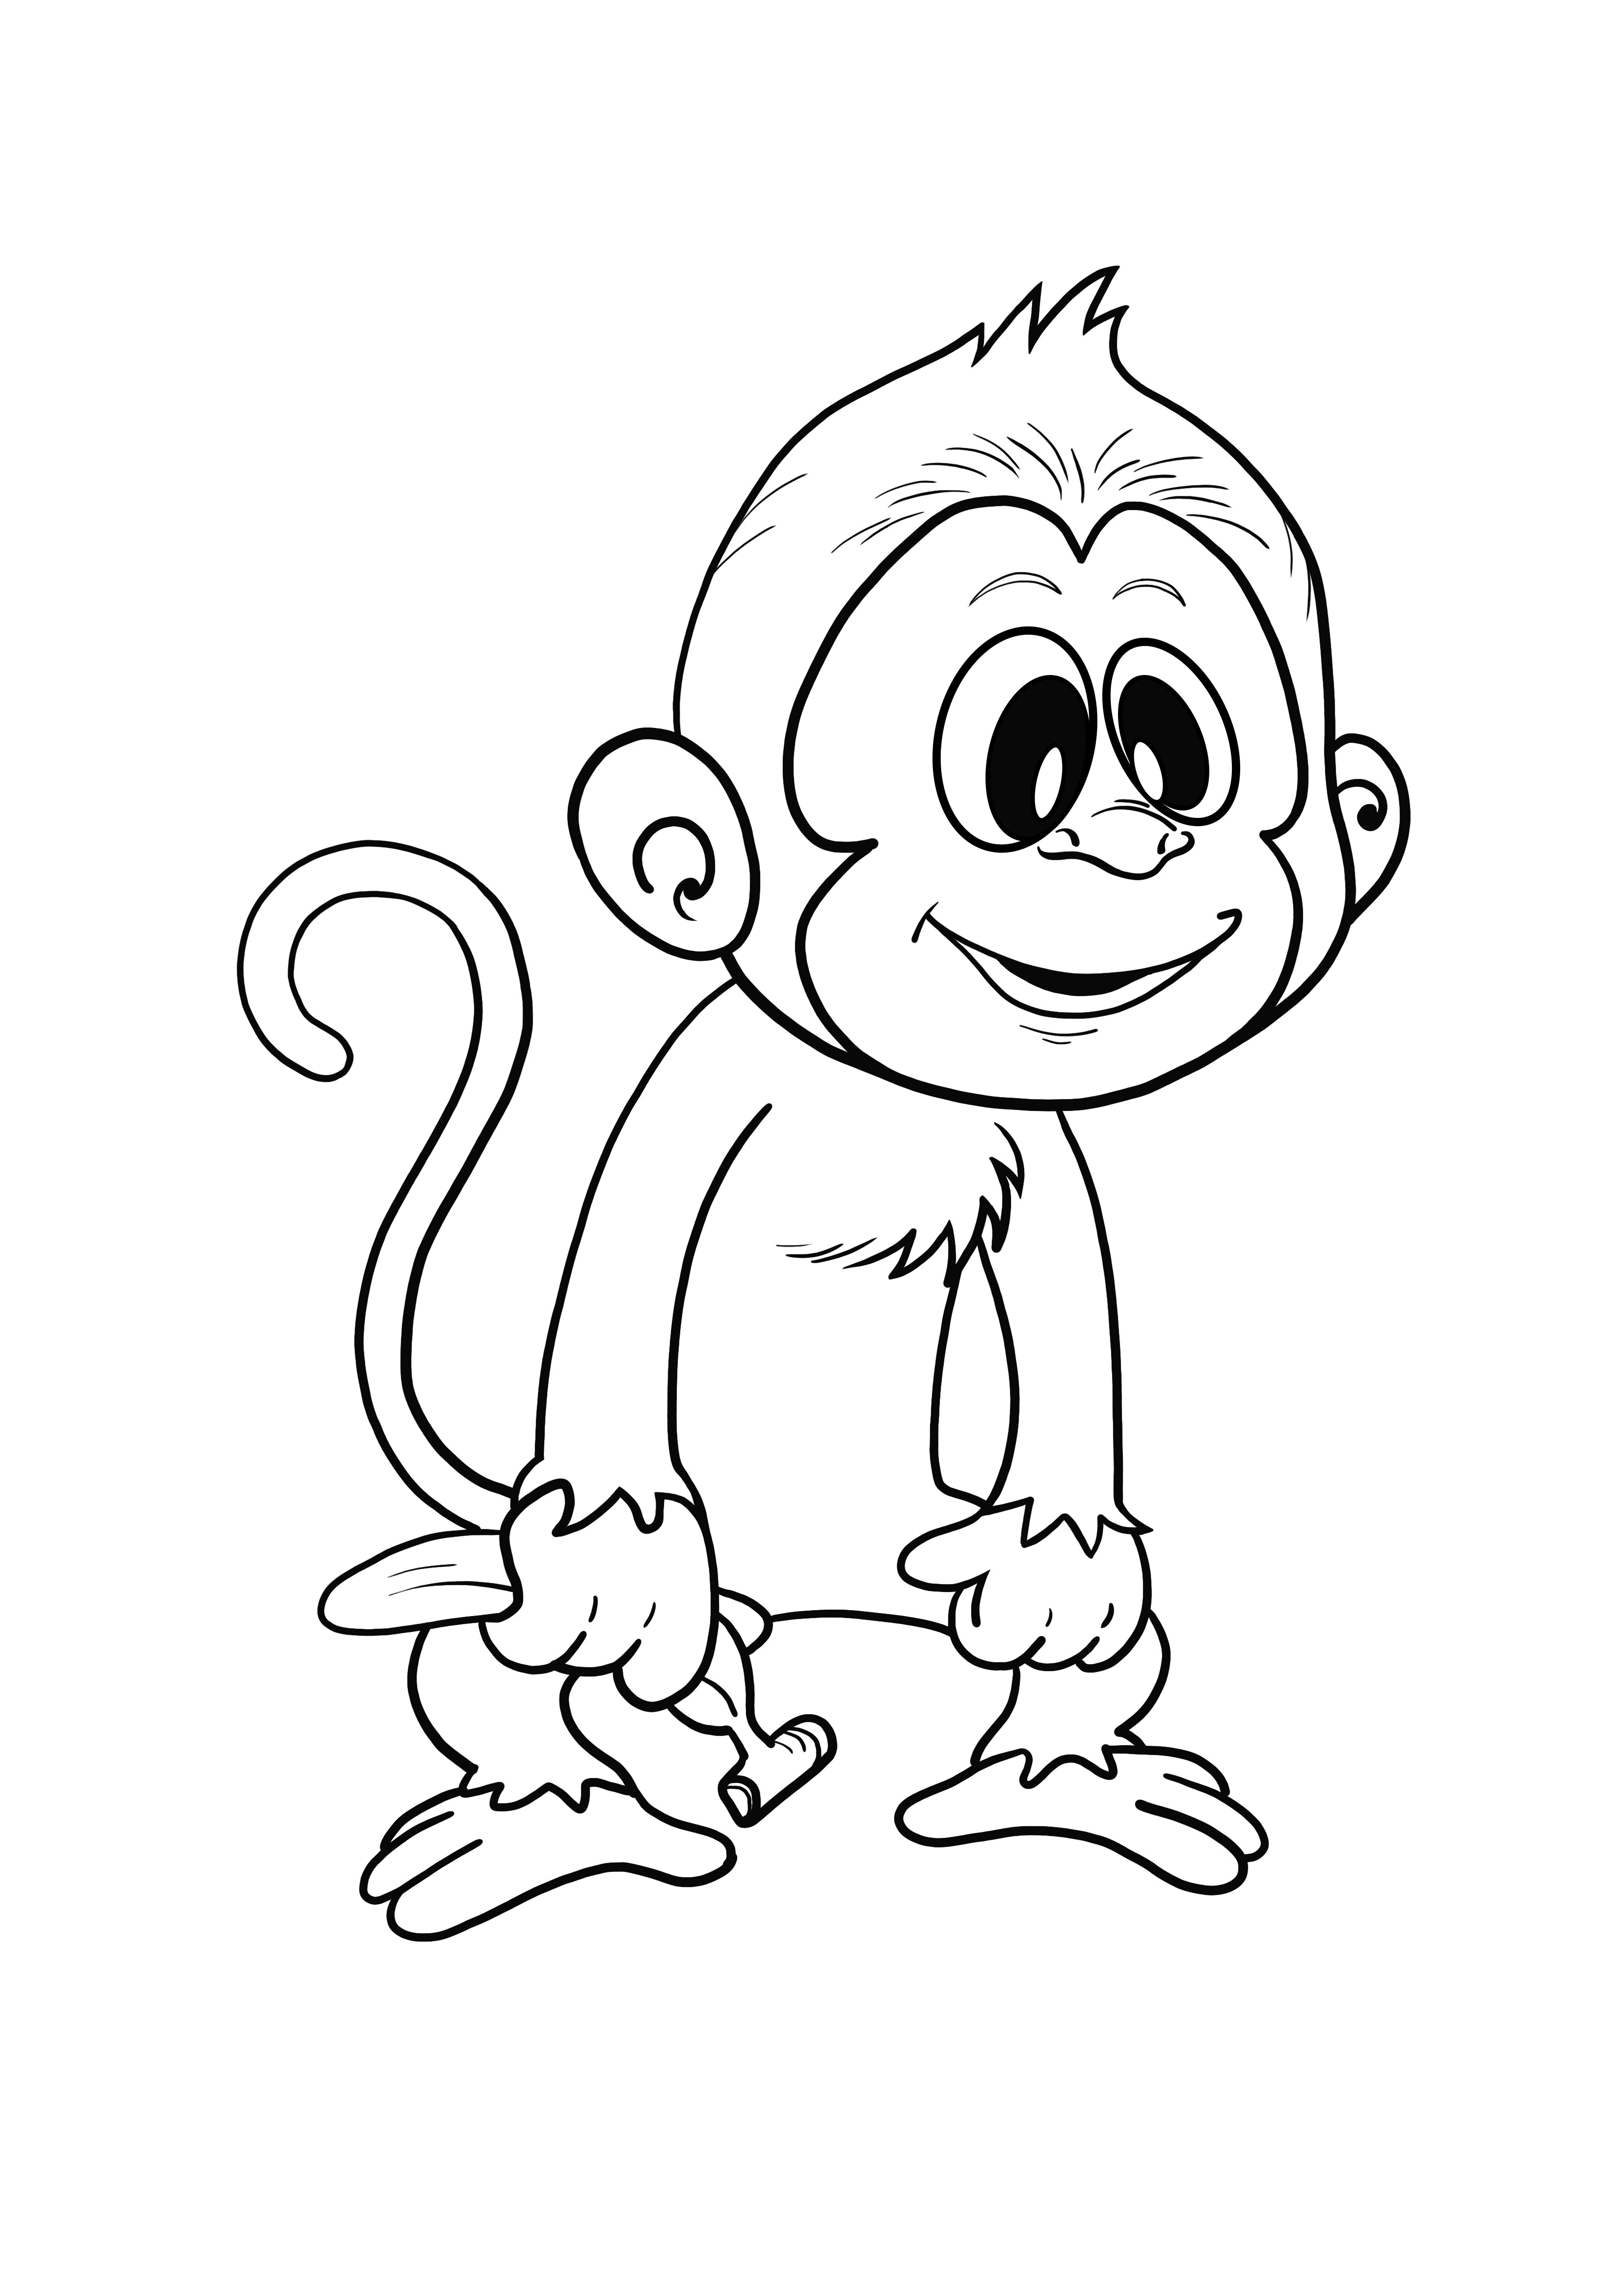 Macaco legal para imprimir página para colorir simples